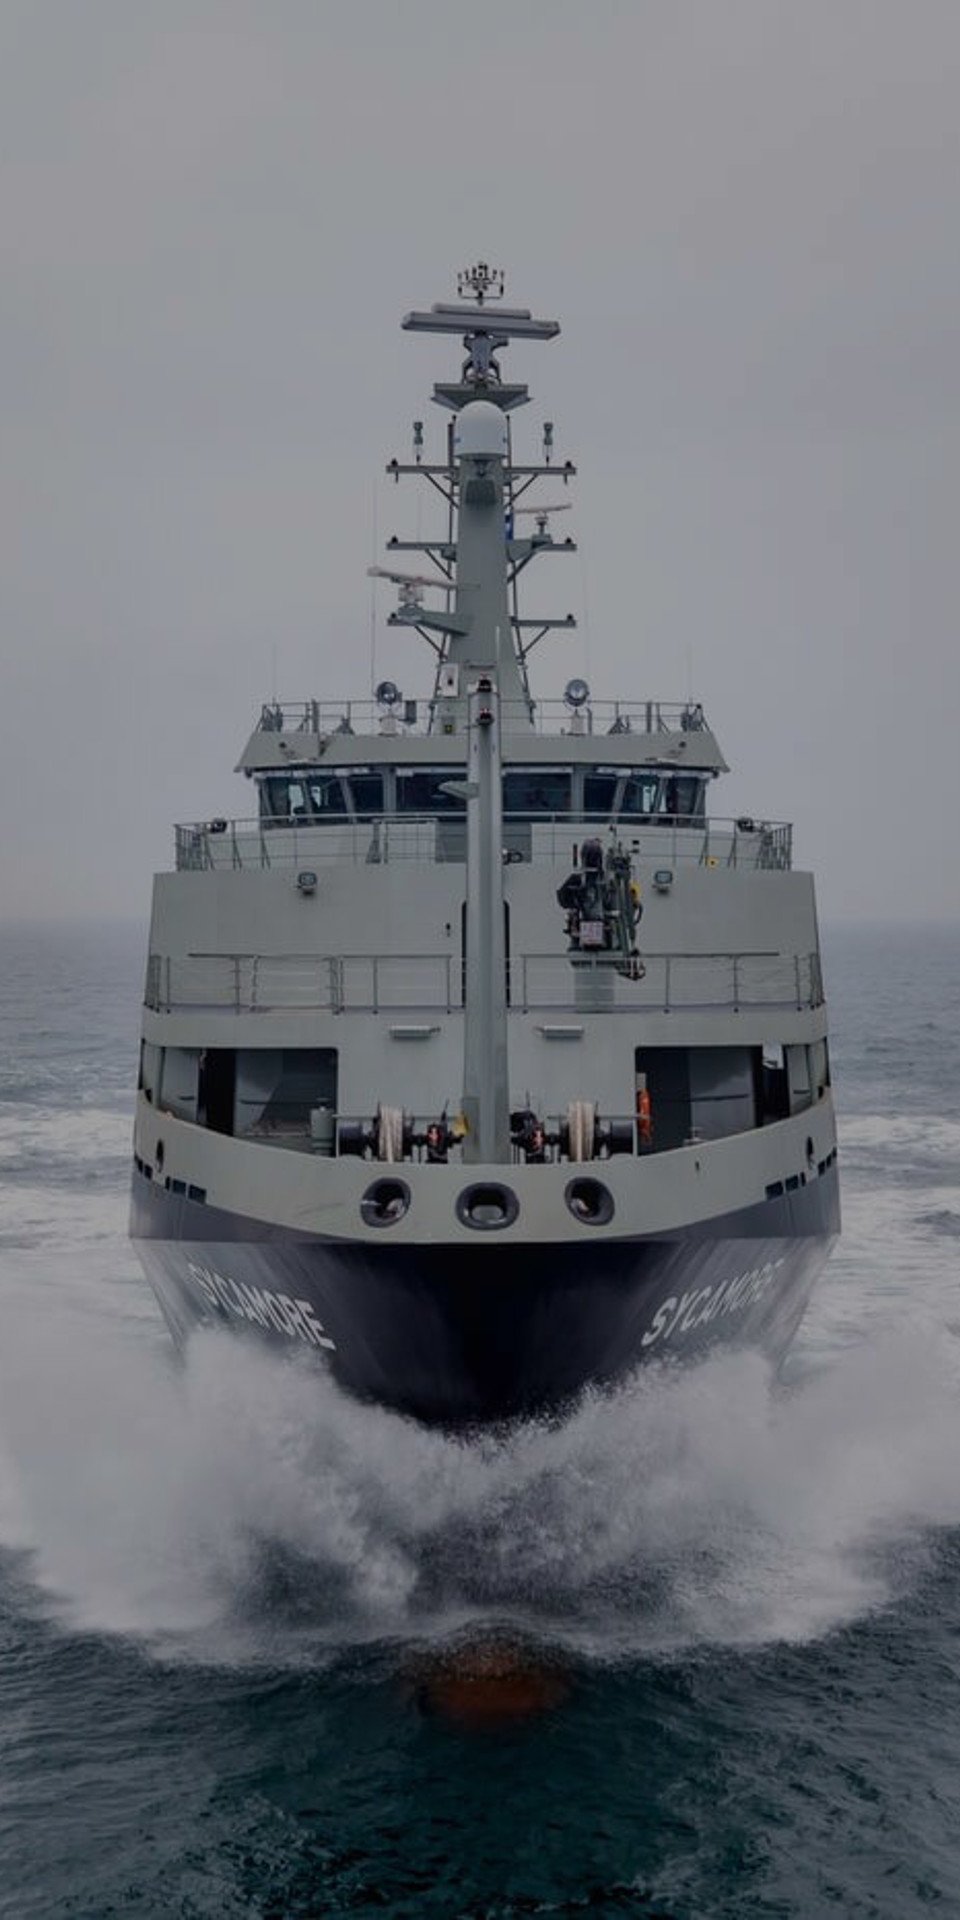 Training Vessel MV Sycamore with Terma naval radars